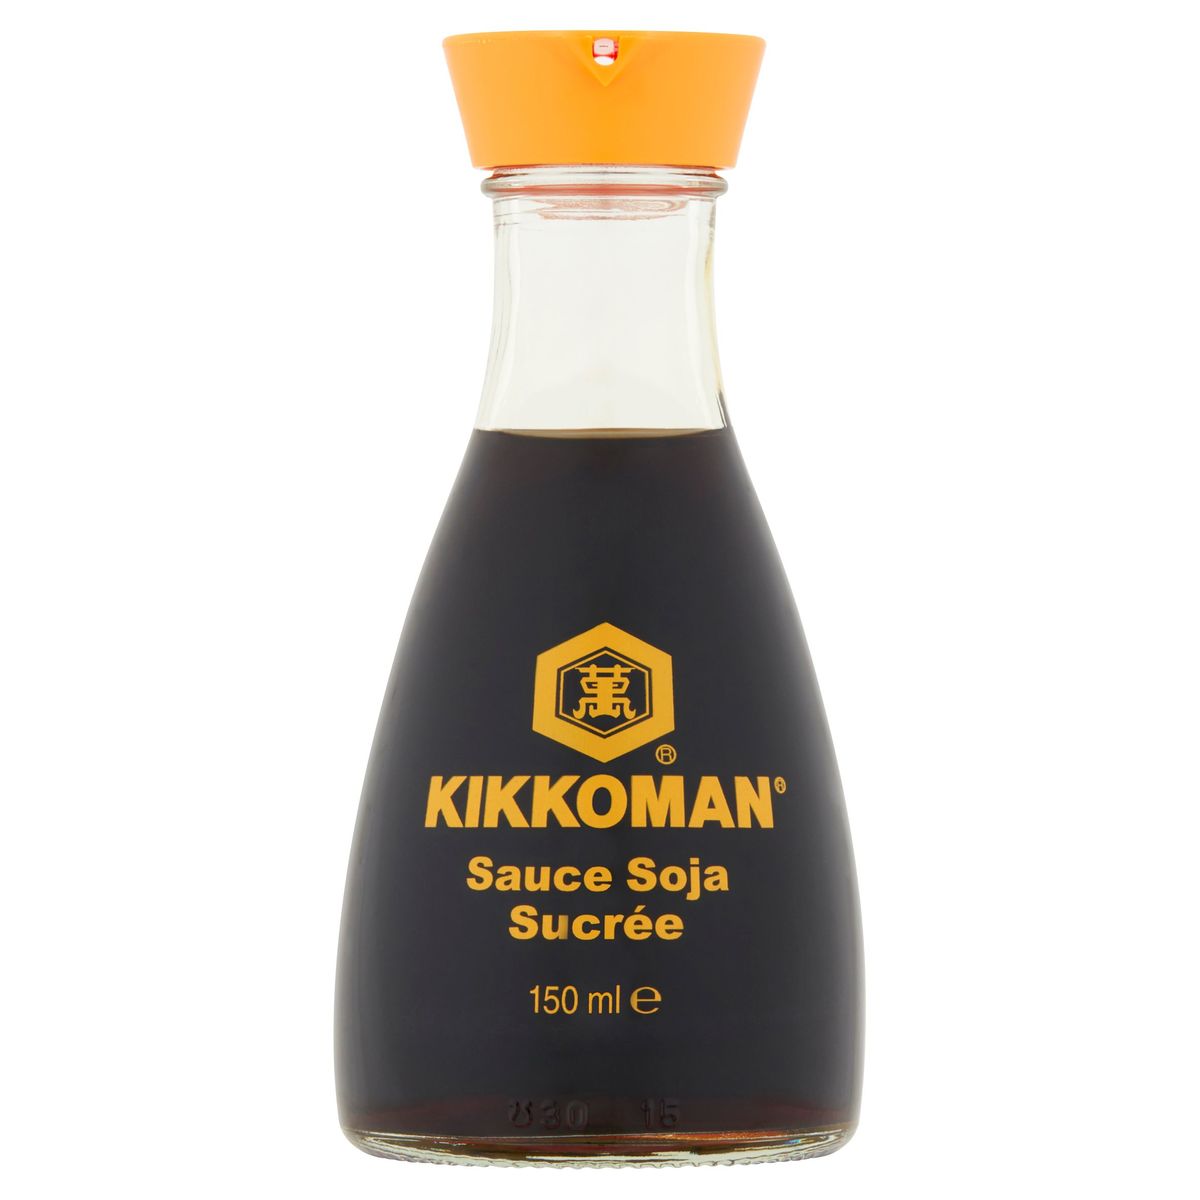 Kikkoman Sauce Soja Sucrée 150 ml